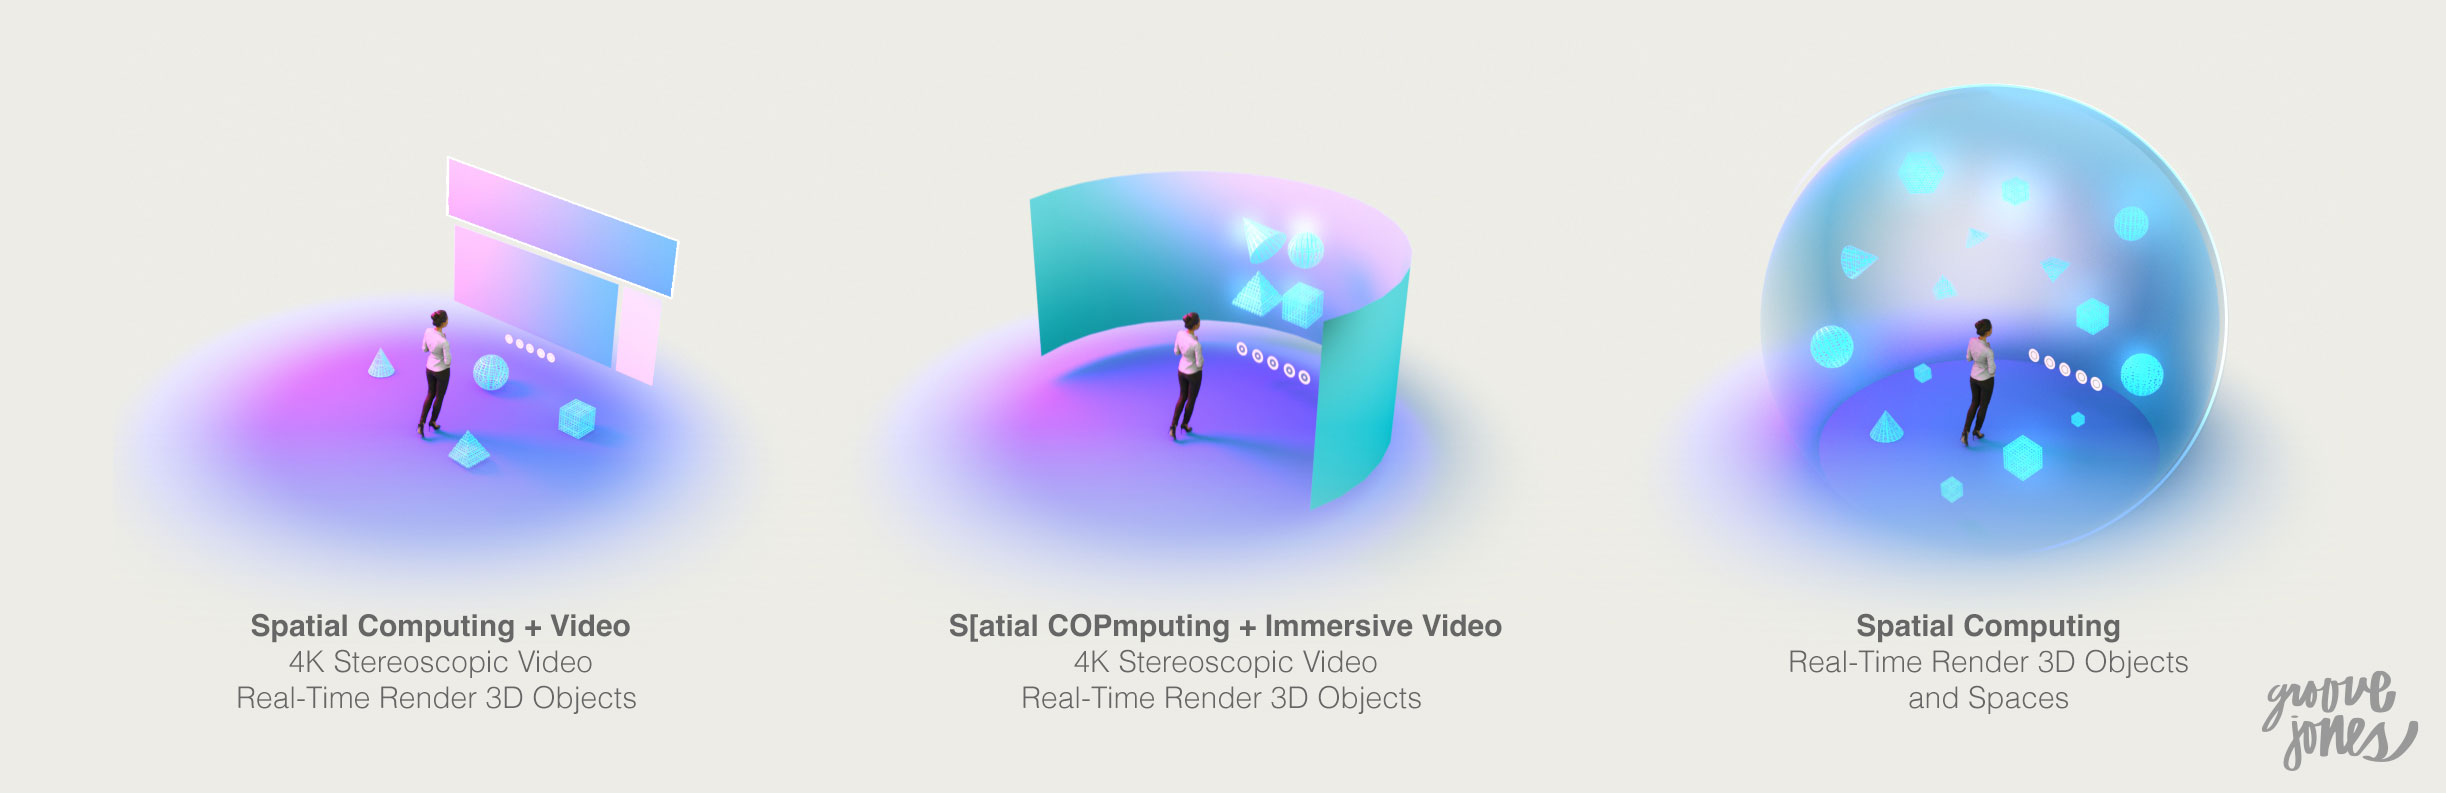 Apple Vision Pro Spatial Computing